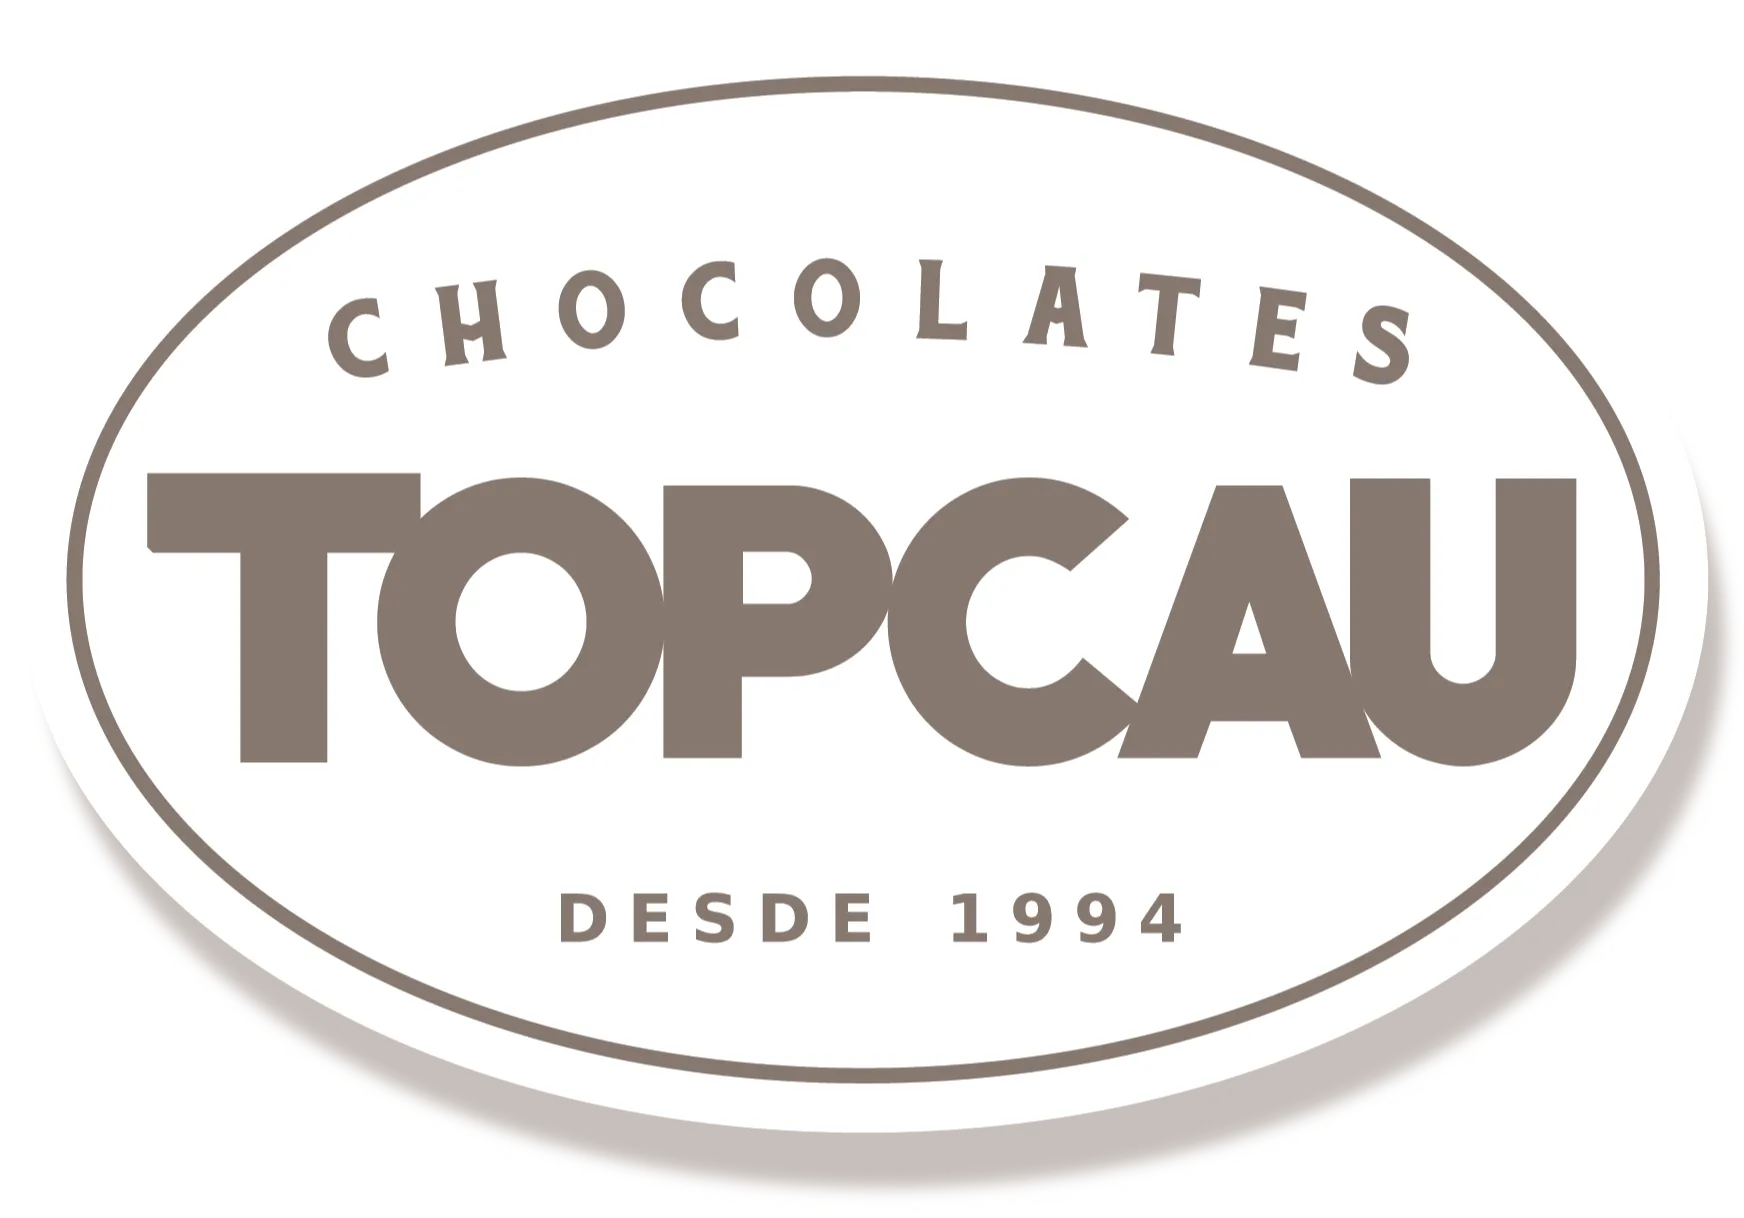 Chocolates Topcau desde 1994